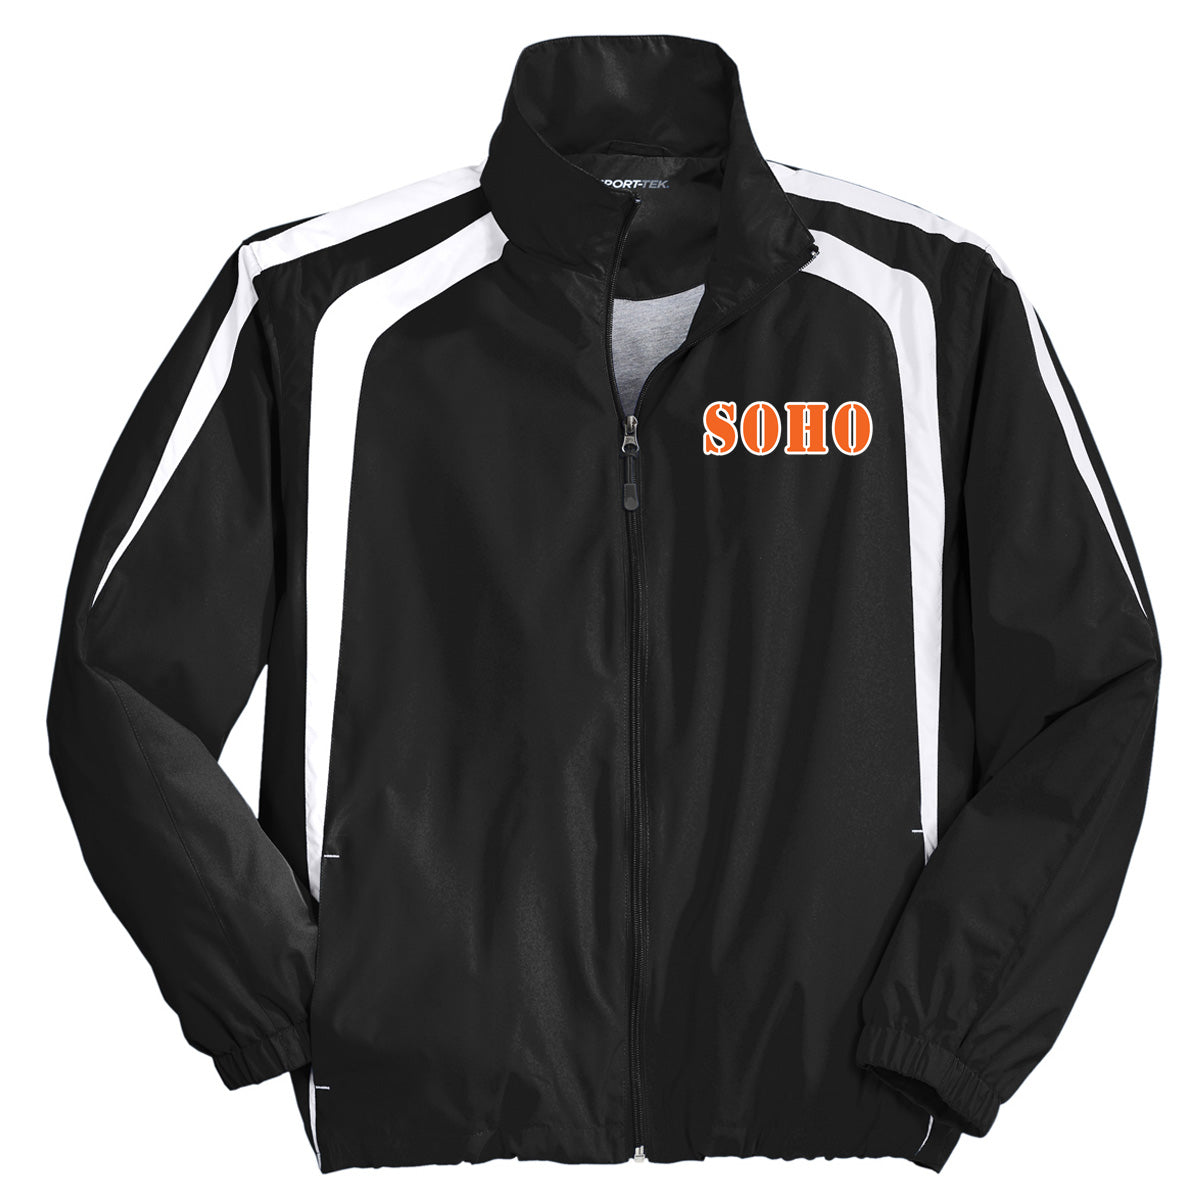 SOHO - Colorblock Raglan Jacket with SOHO (Stencil Font) - Black